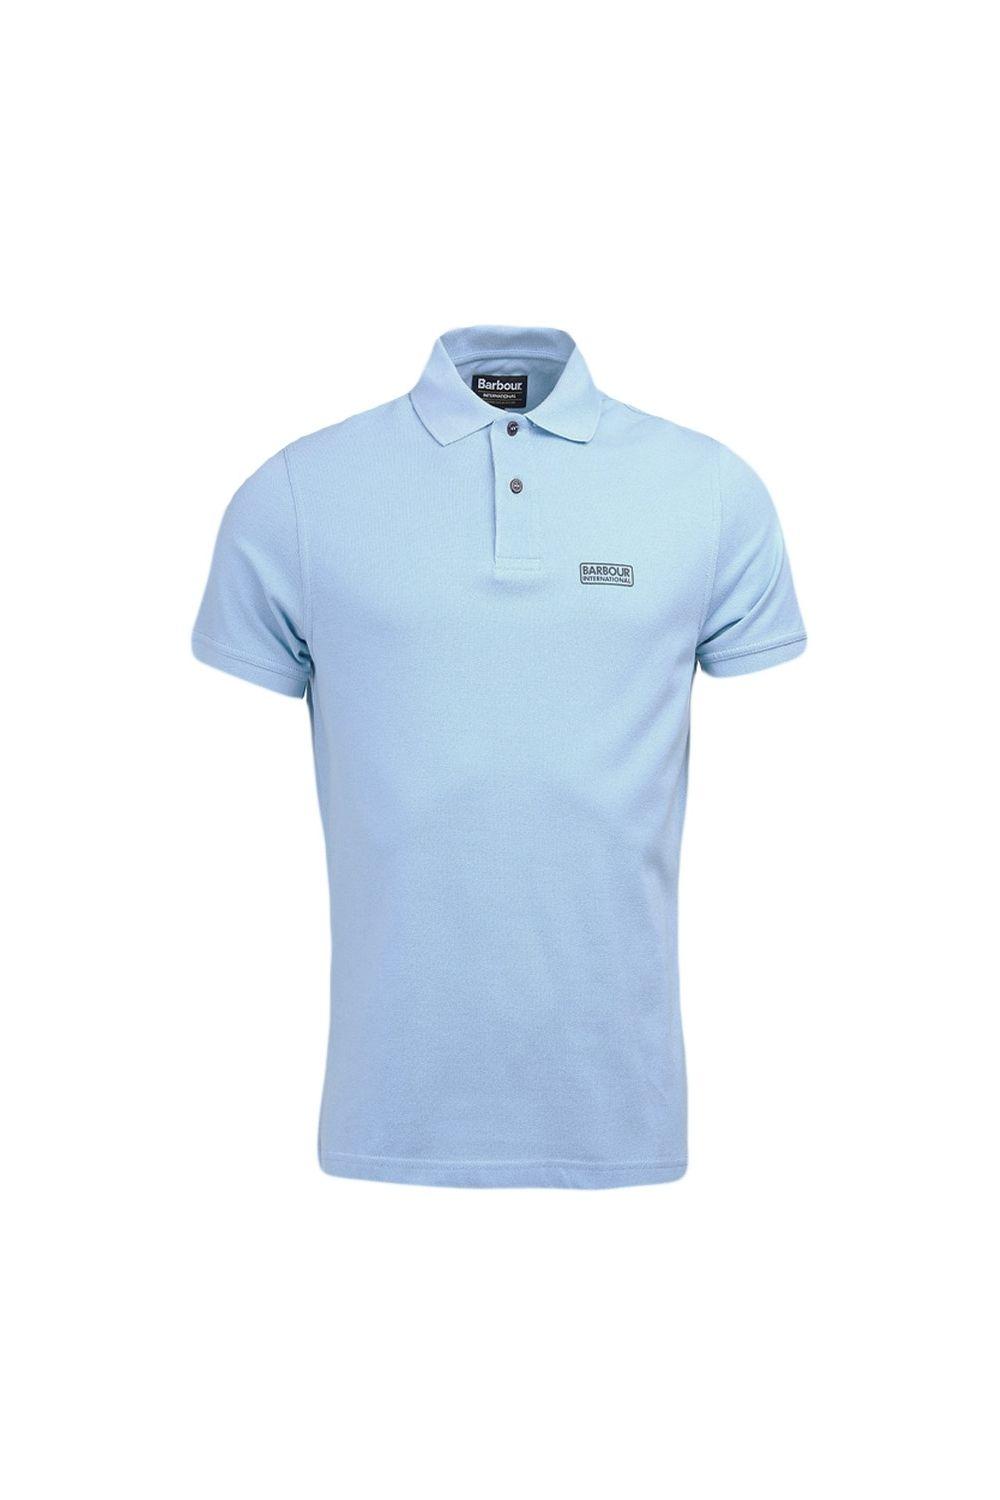 Light Blue Polo Logo - Barbour Polo Shirt in Light Blue MML0398/IN71 | Michael Stewart Menswear